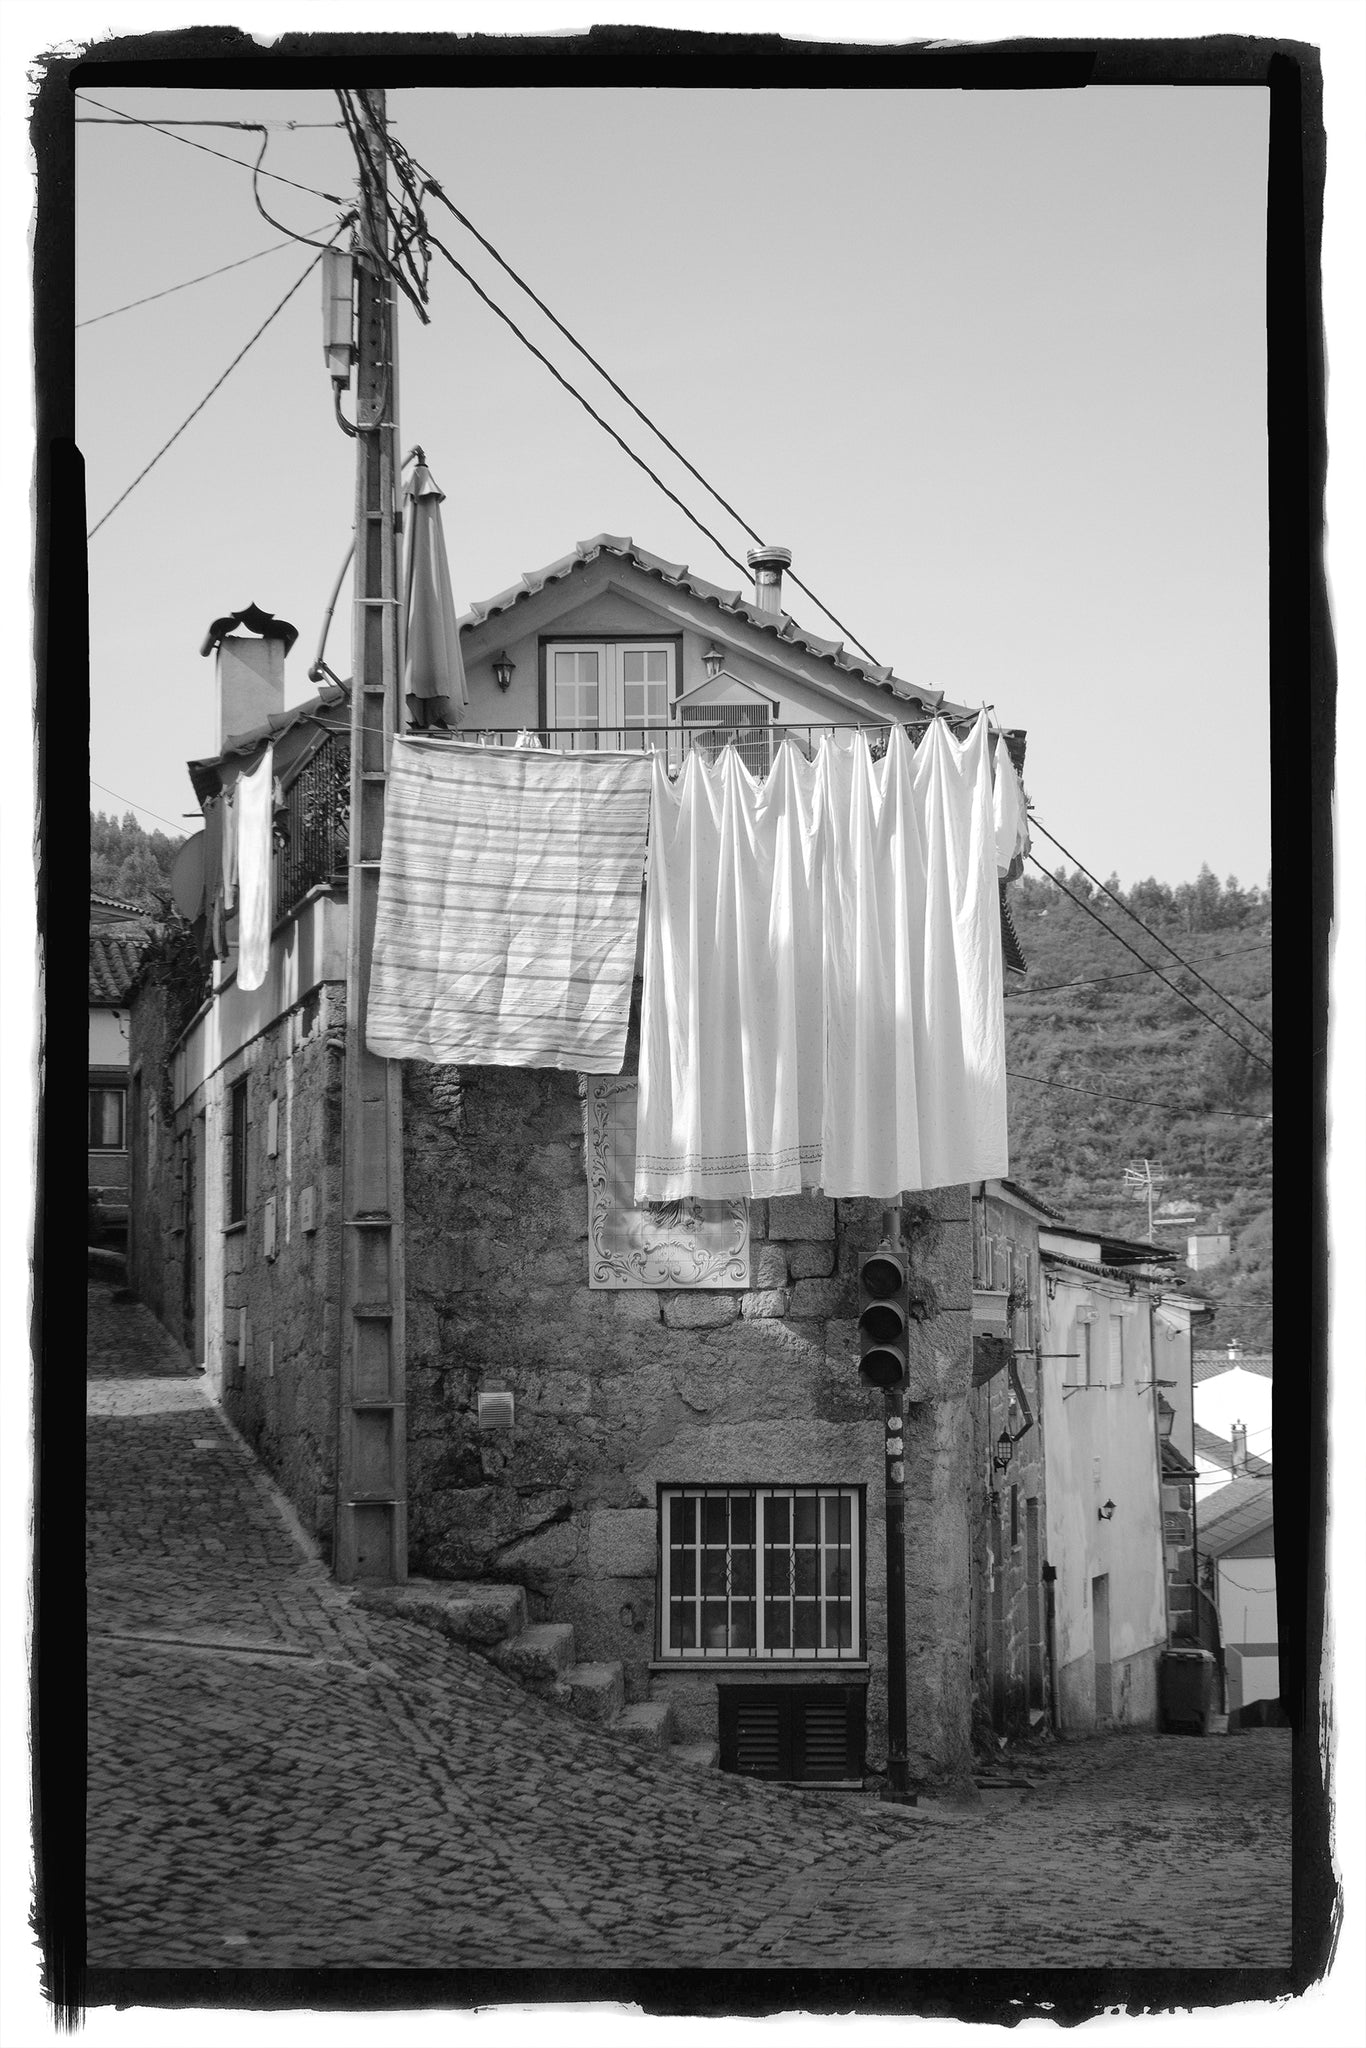 Village corner, Portugal